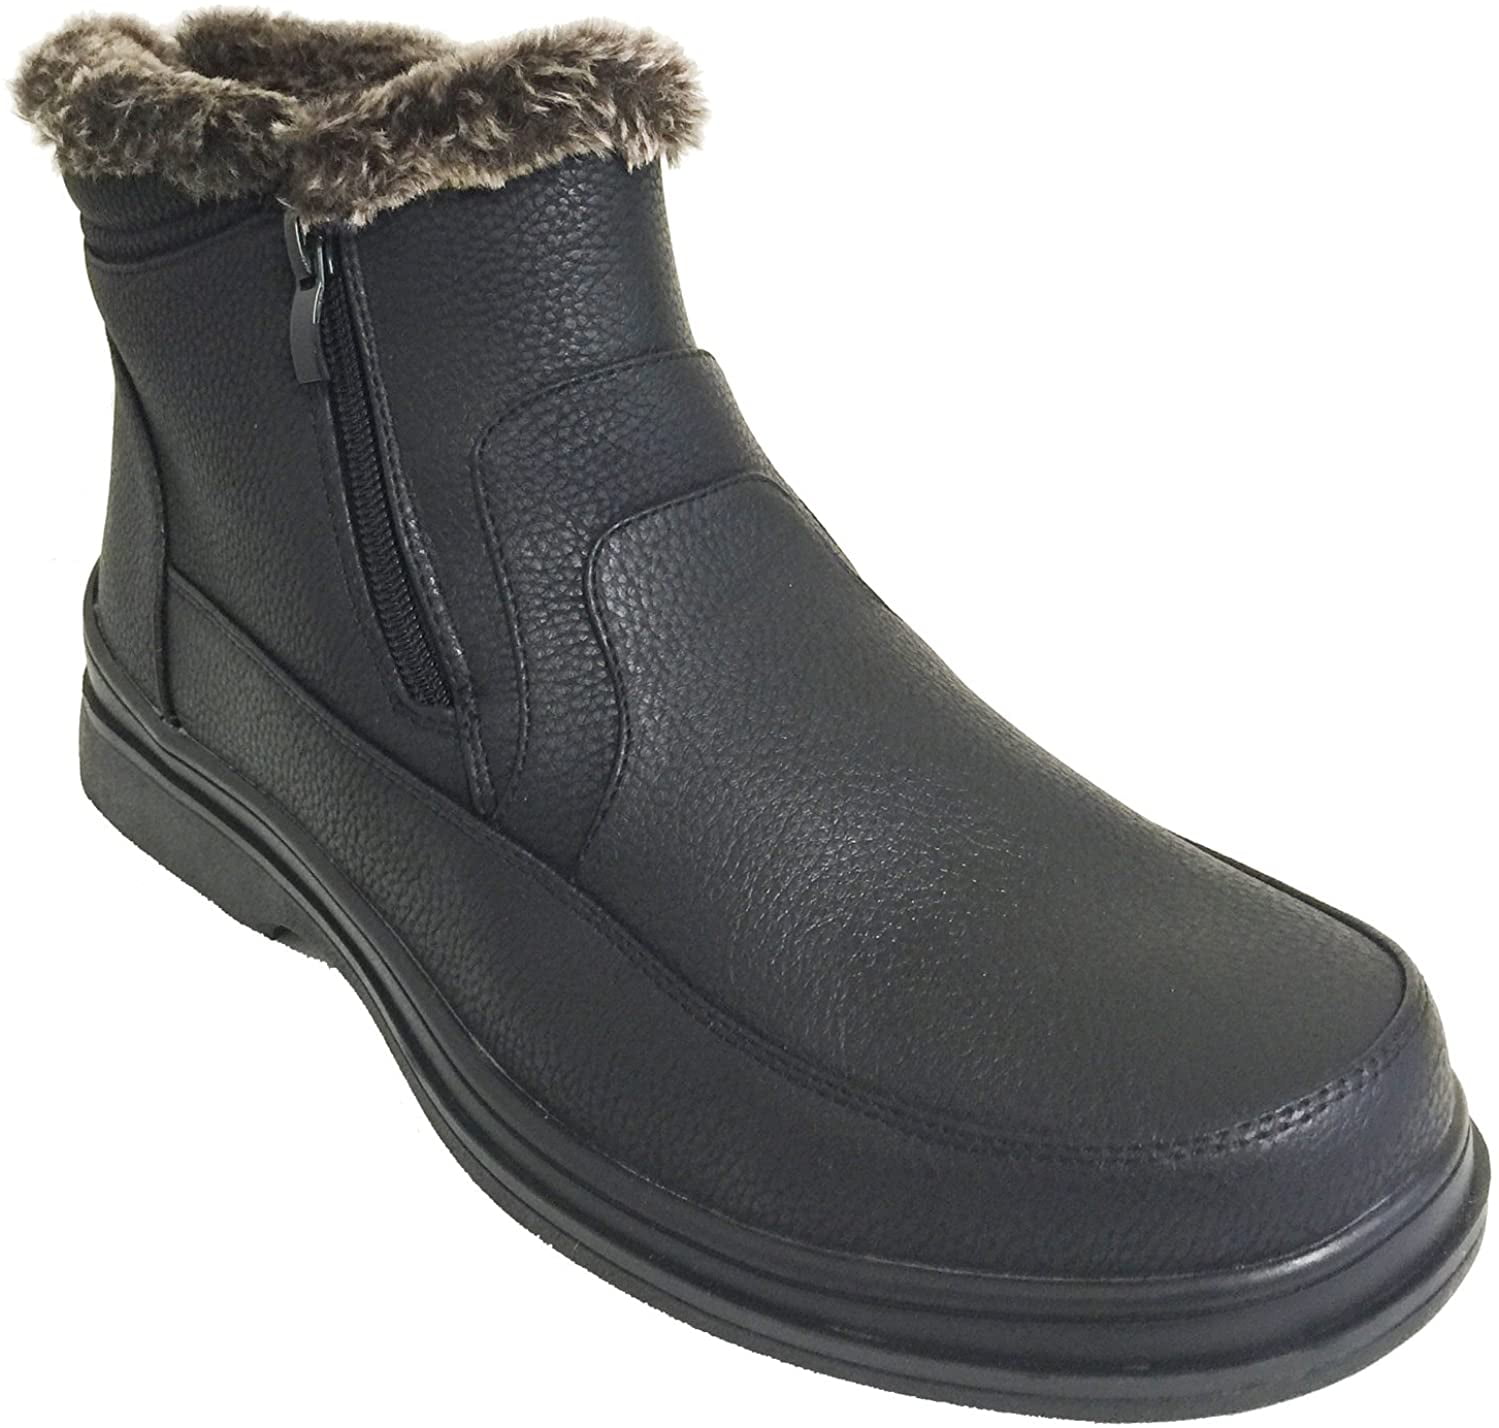 Men's Winter Boots Black Fur Lined Dual Side Zipper Ankle Warm Snow Shoes 7.5-13 